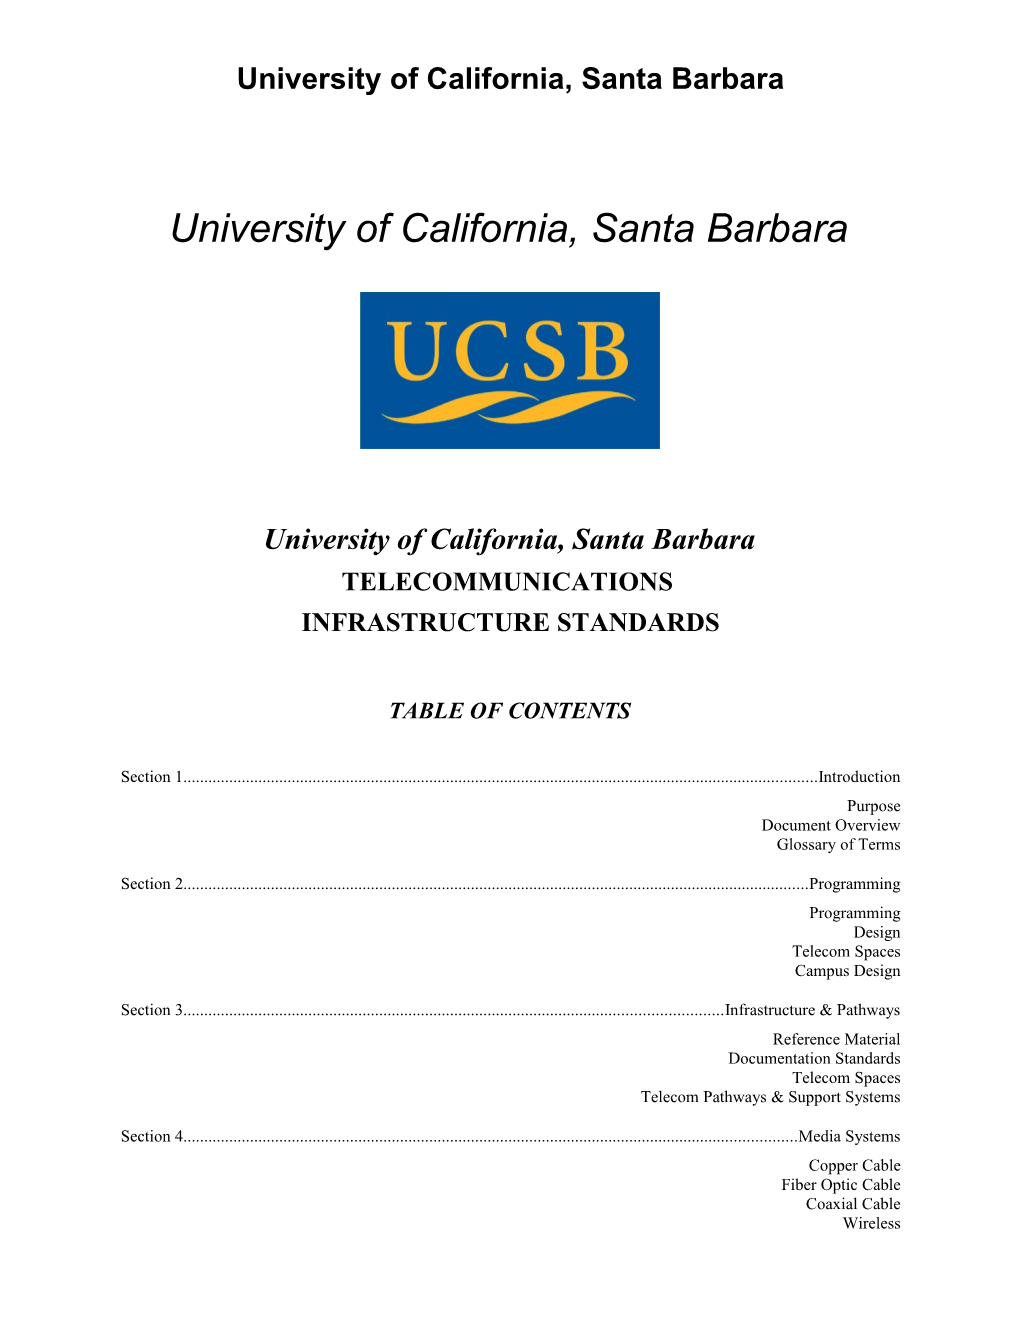 University of California, Santa Barbara s1